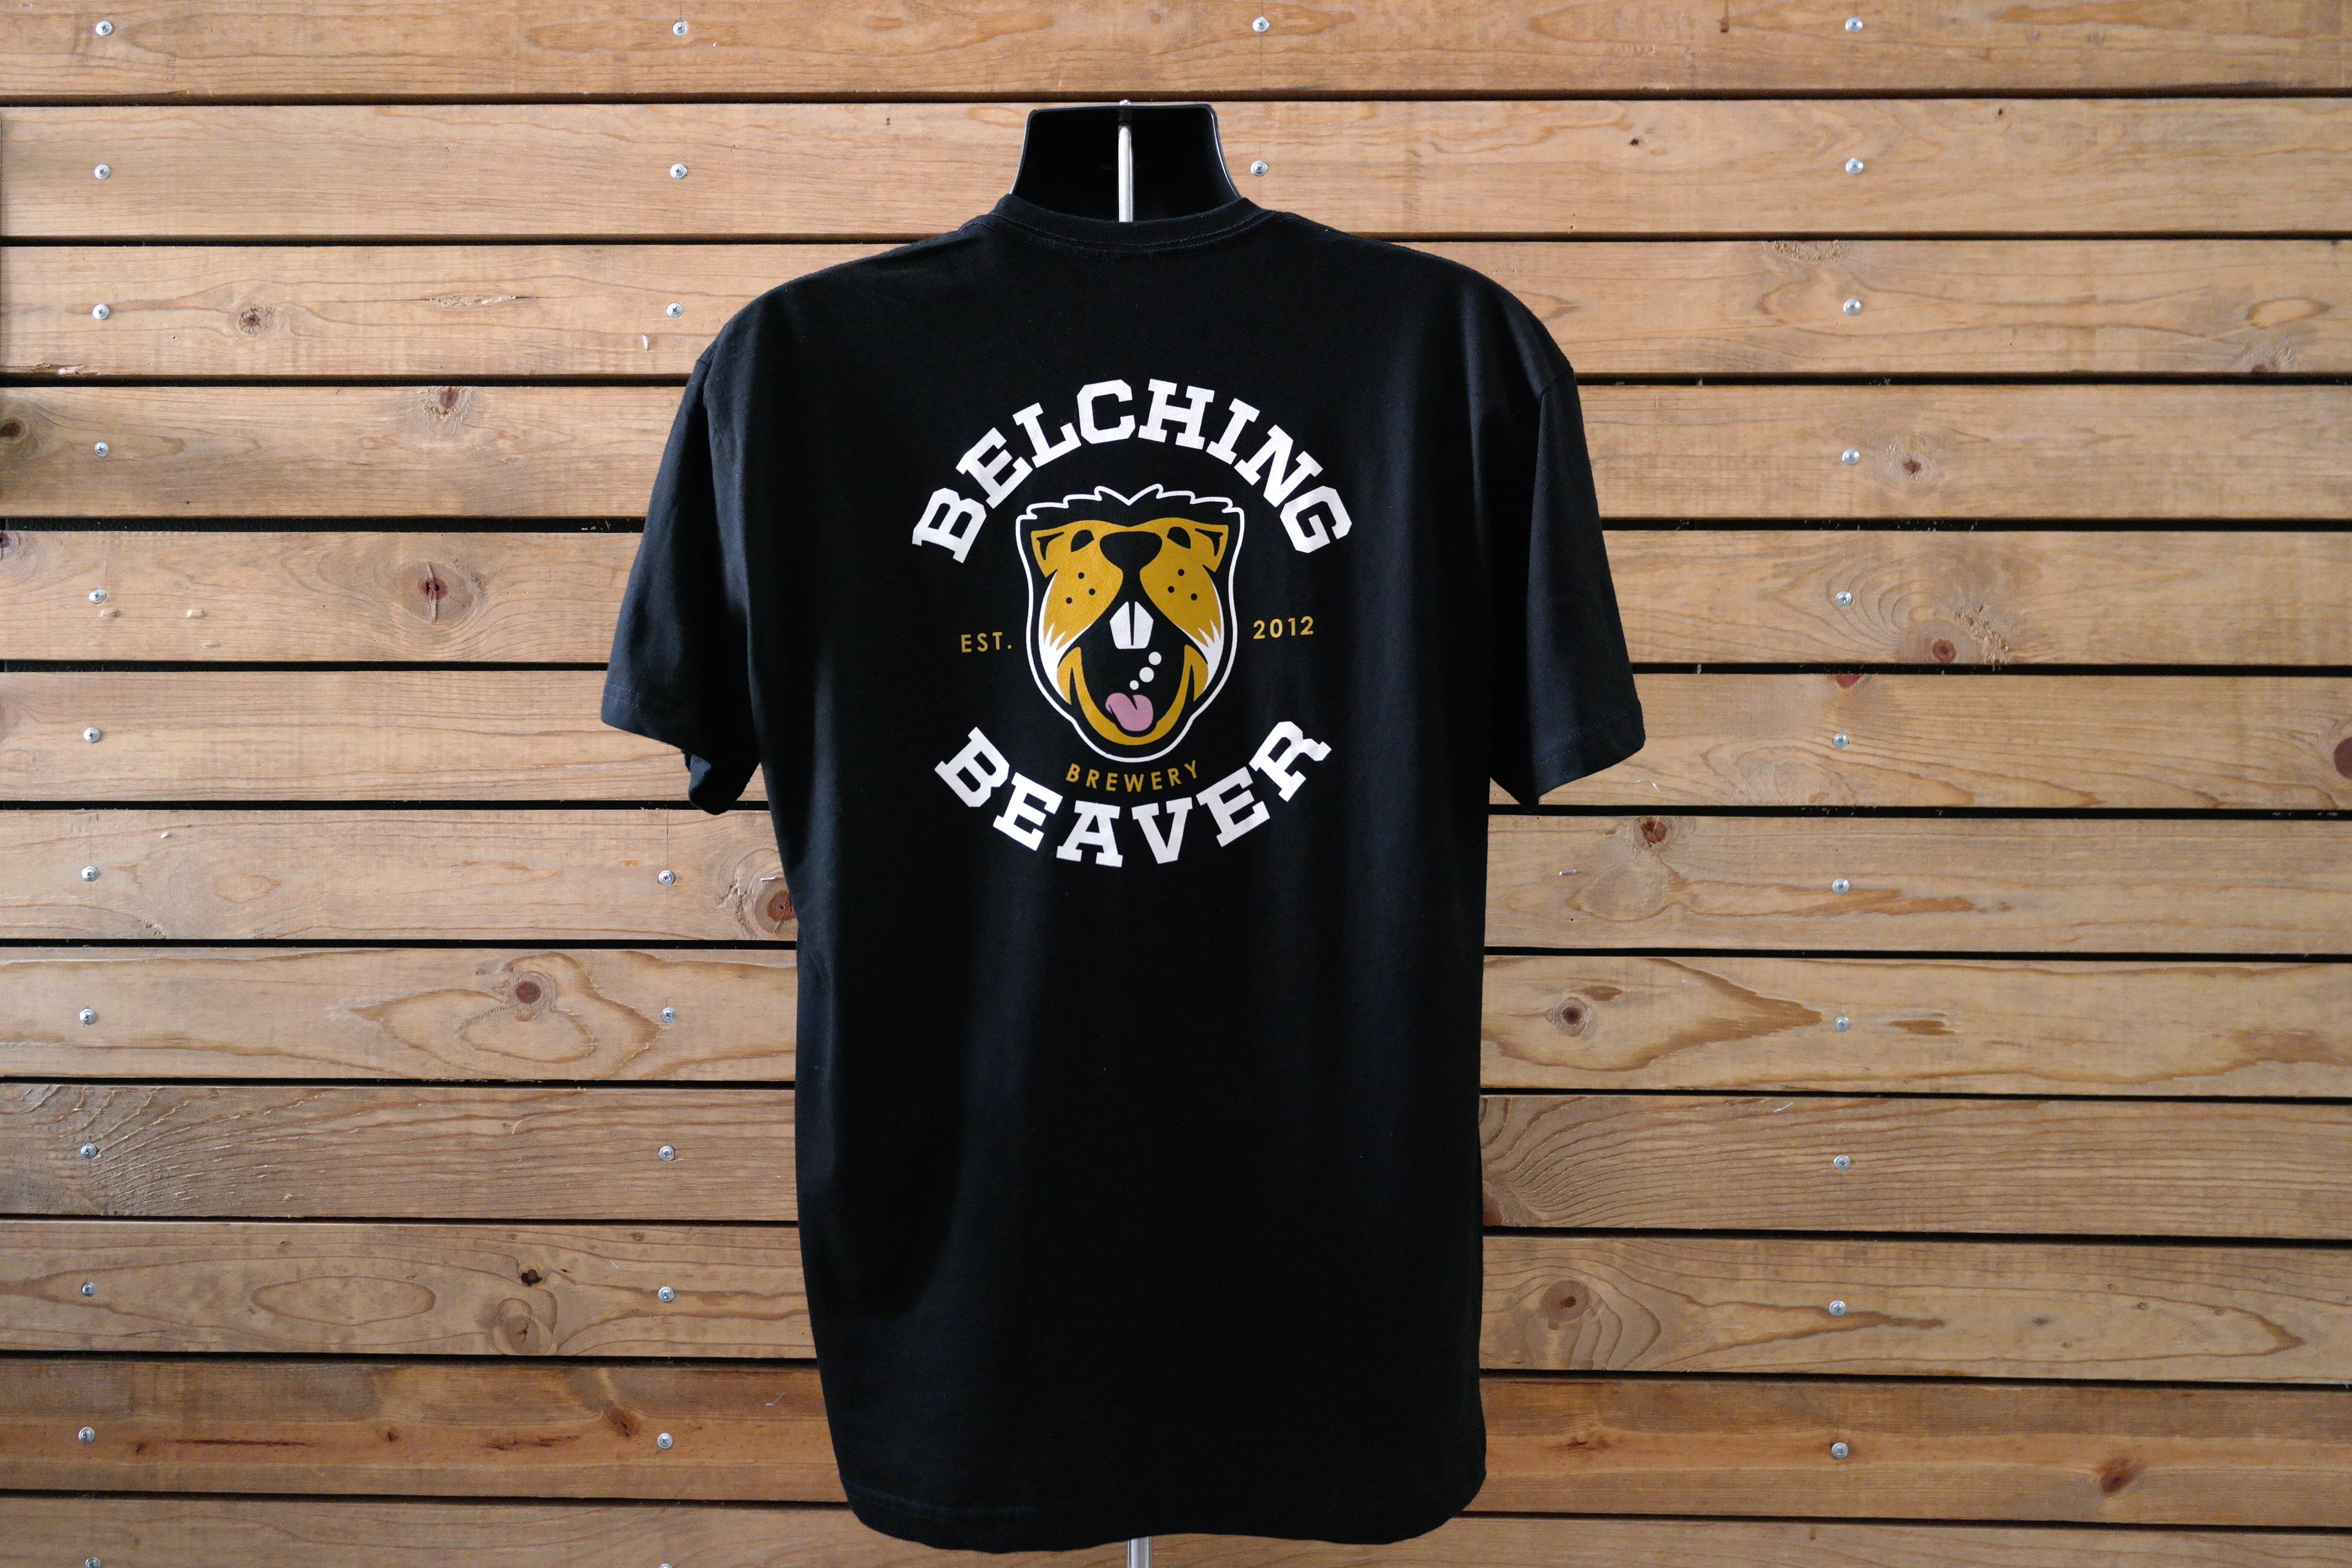 belching beaver t shirt